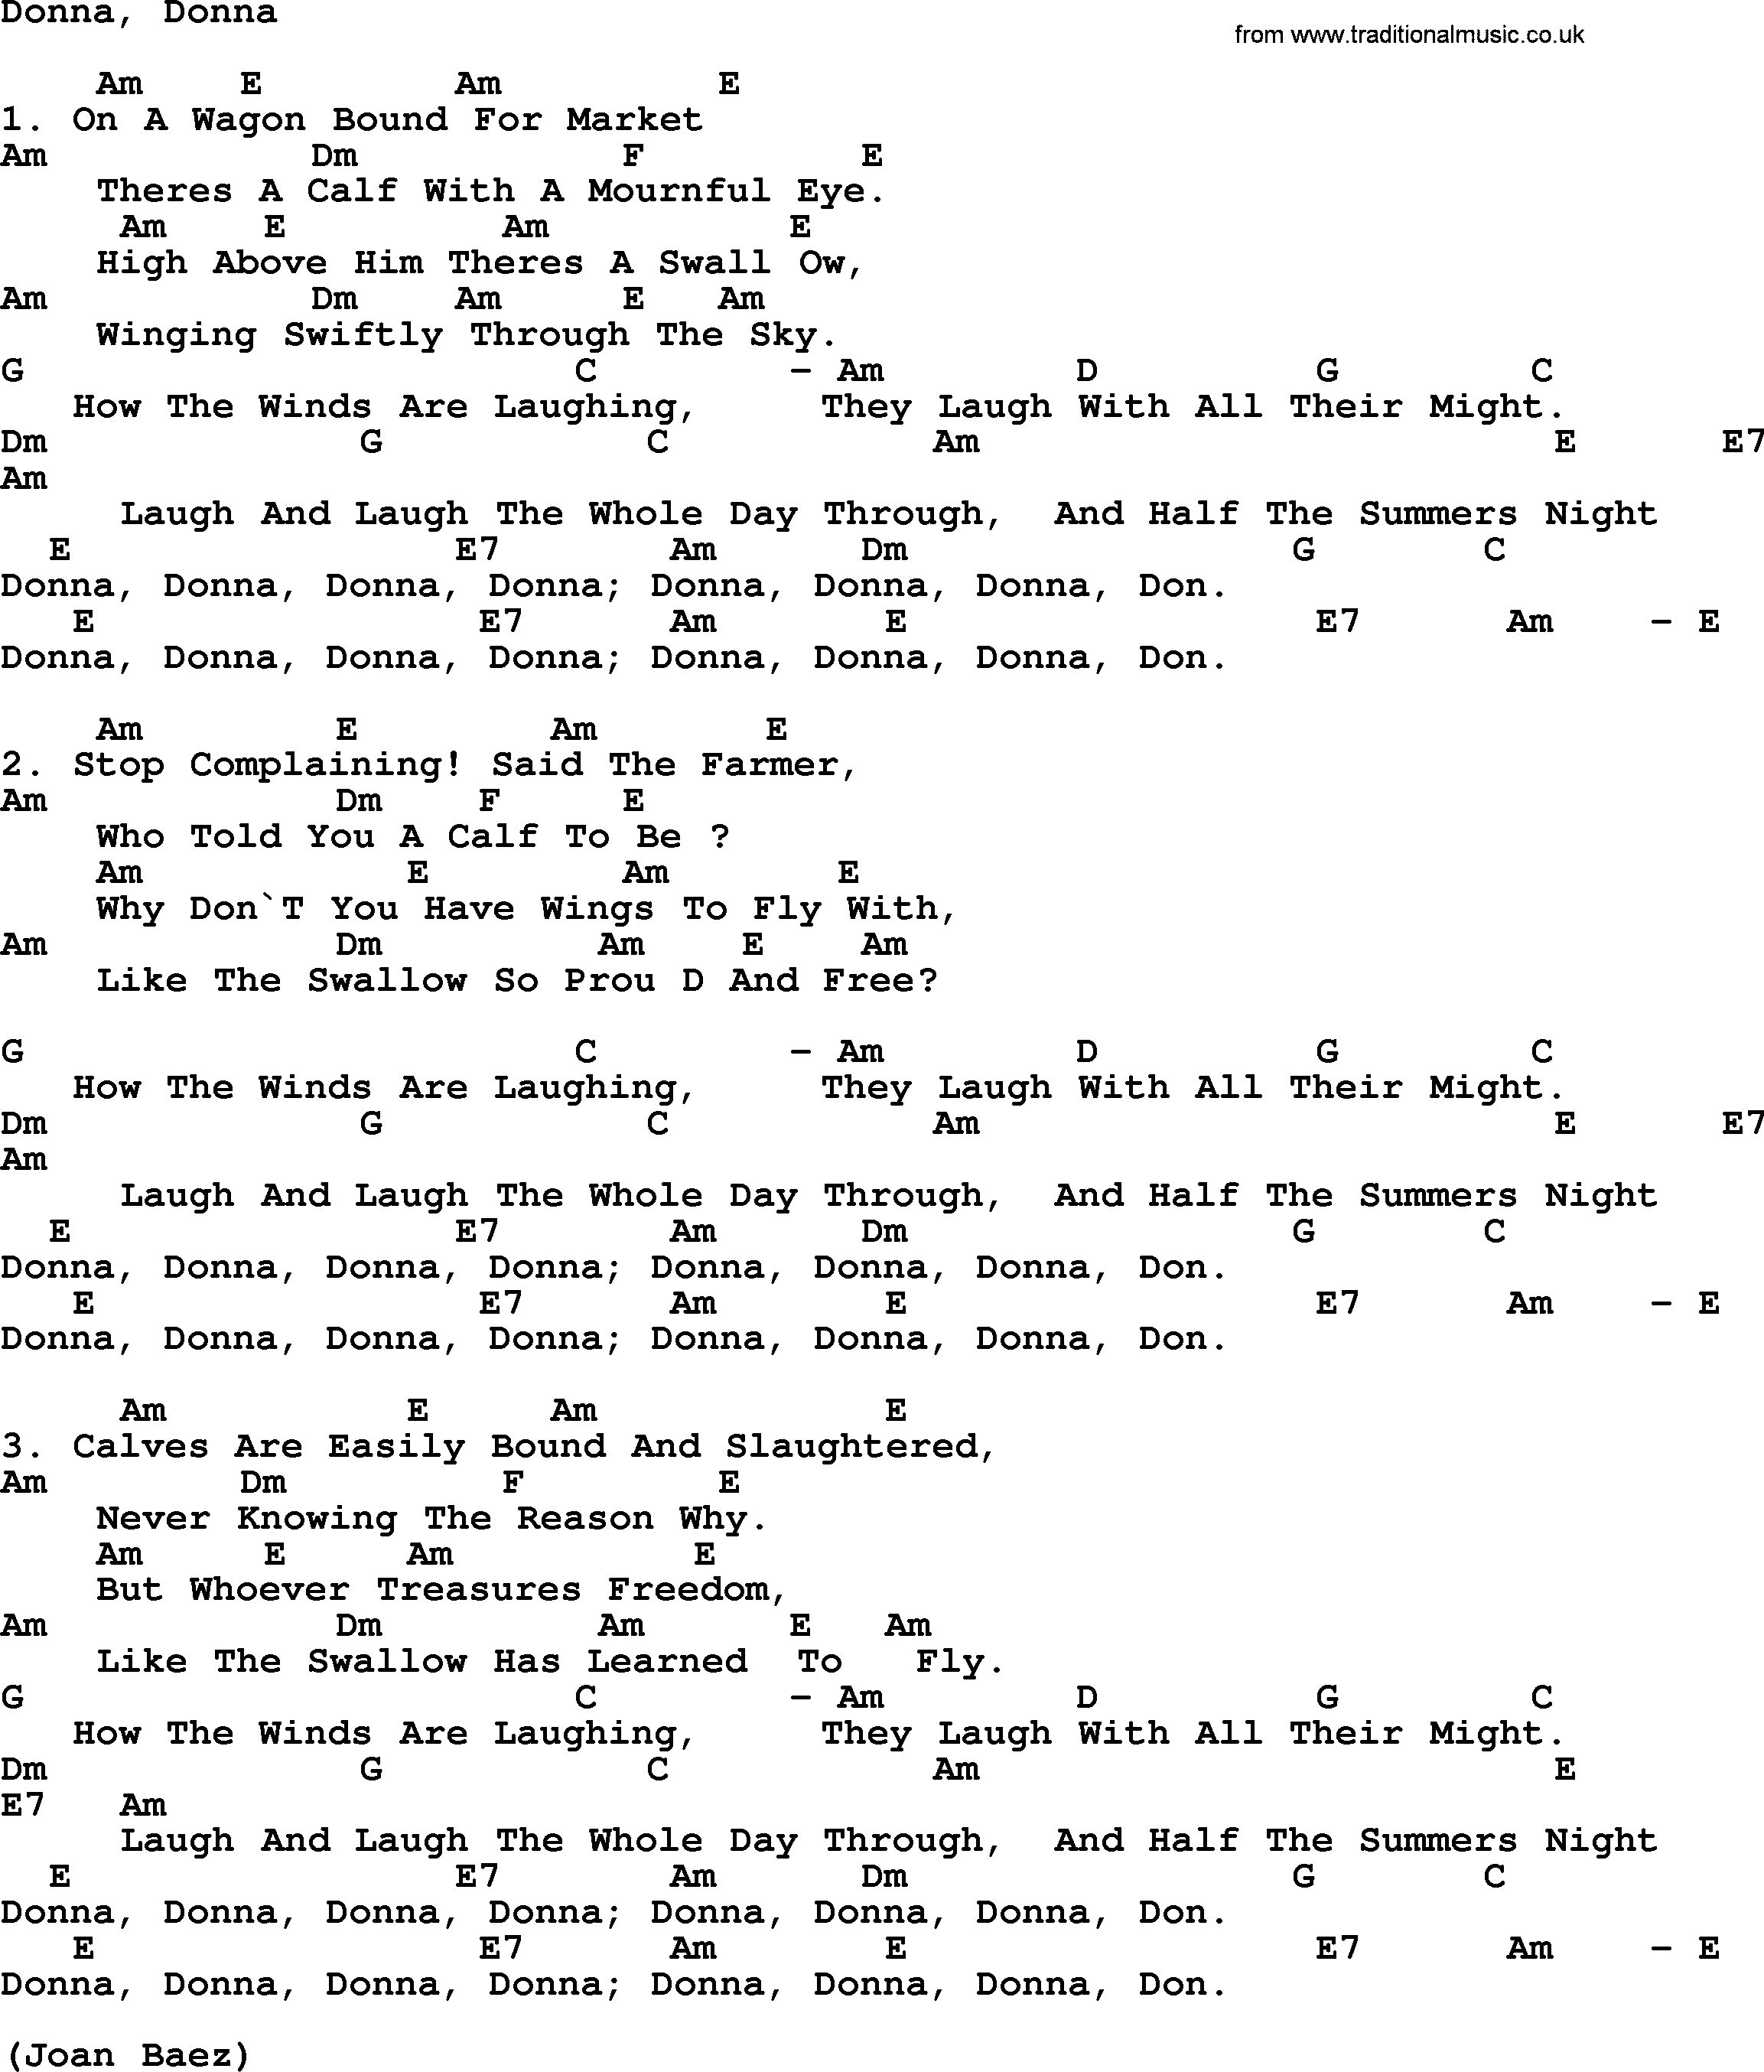 Joan Baez song Donna Donna(E) lyrics and chords